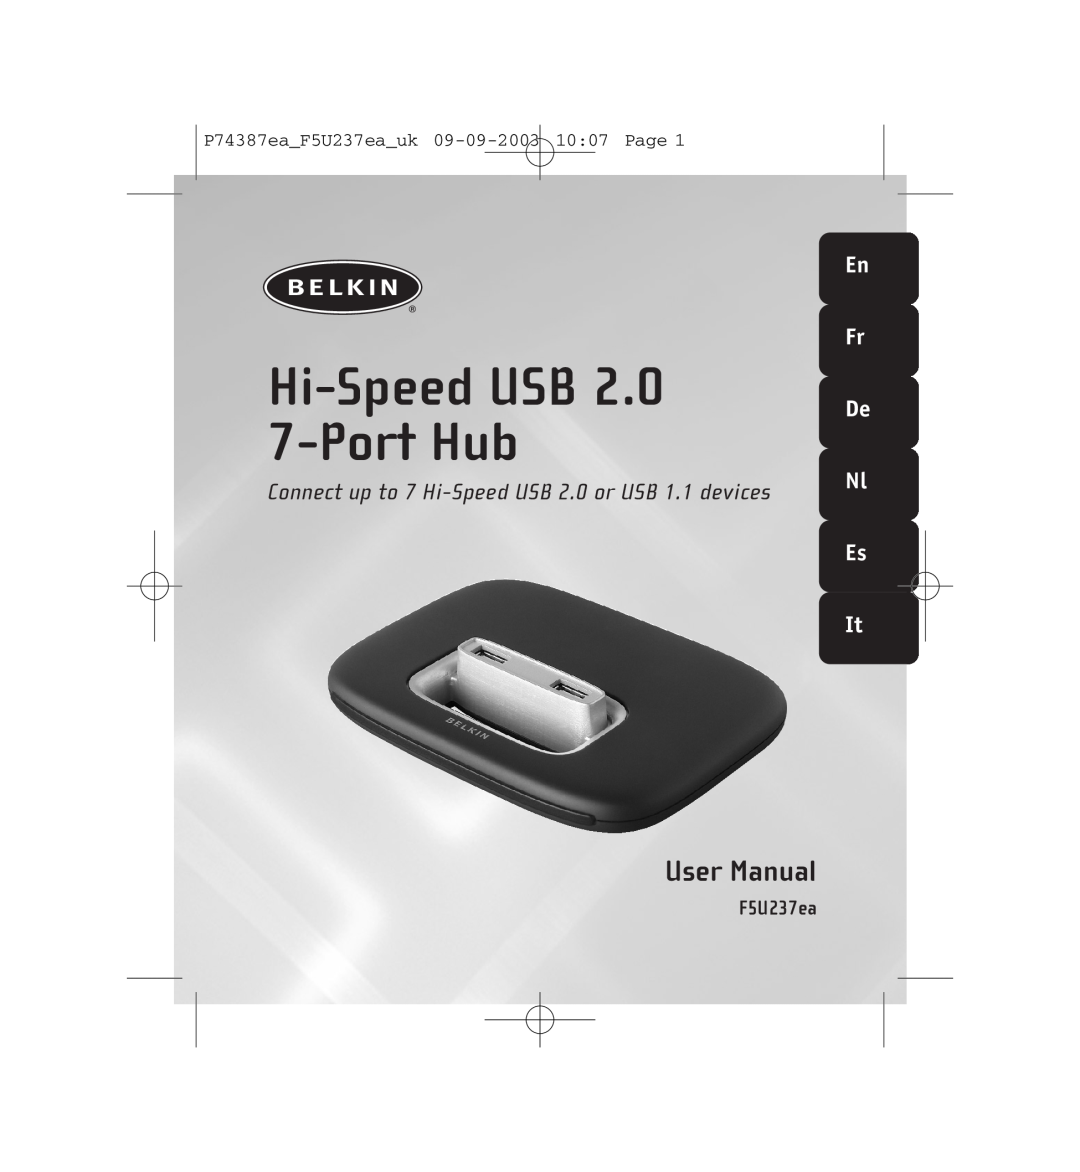 Belkin F5U237EA user manual En Fr, P74387eaF5U237eauk 09-09-2003 1007 Page, Hi-Speed USB 2.0 7-Port Hub 